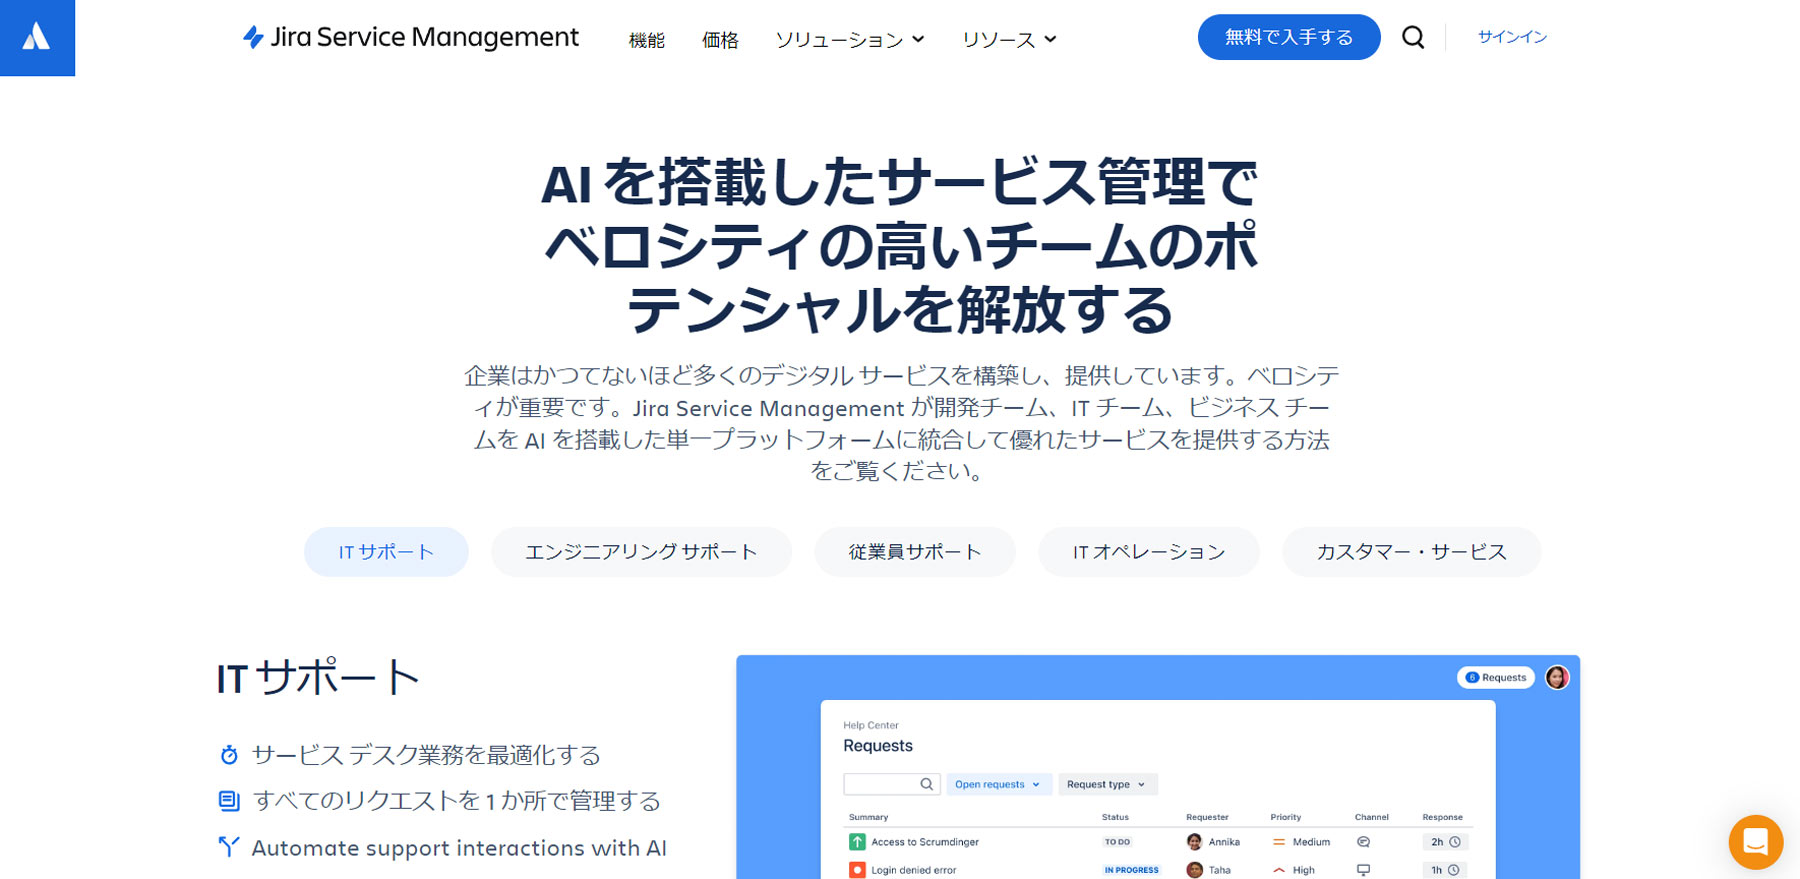 Jira Service Management公式Webサイト